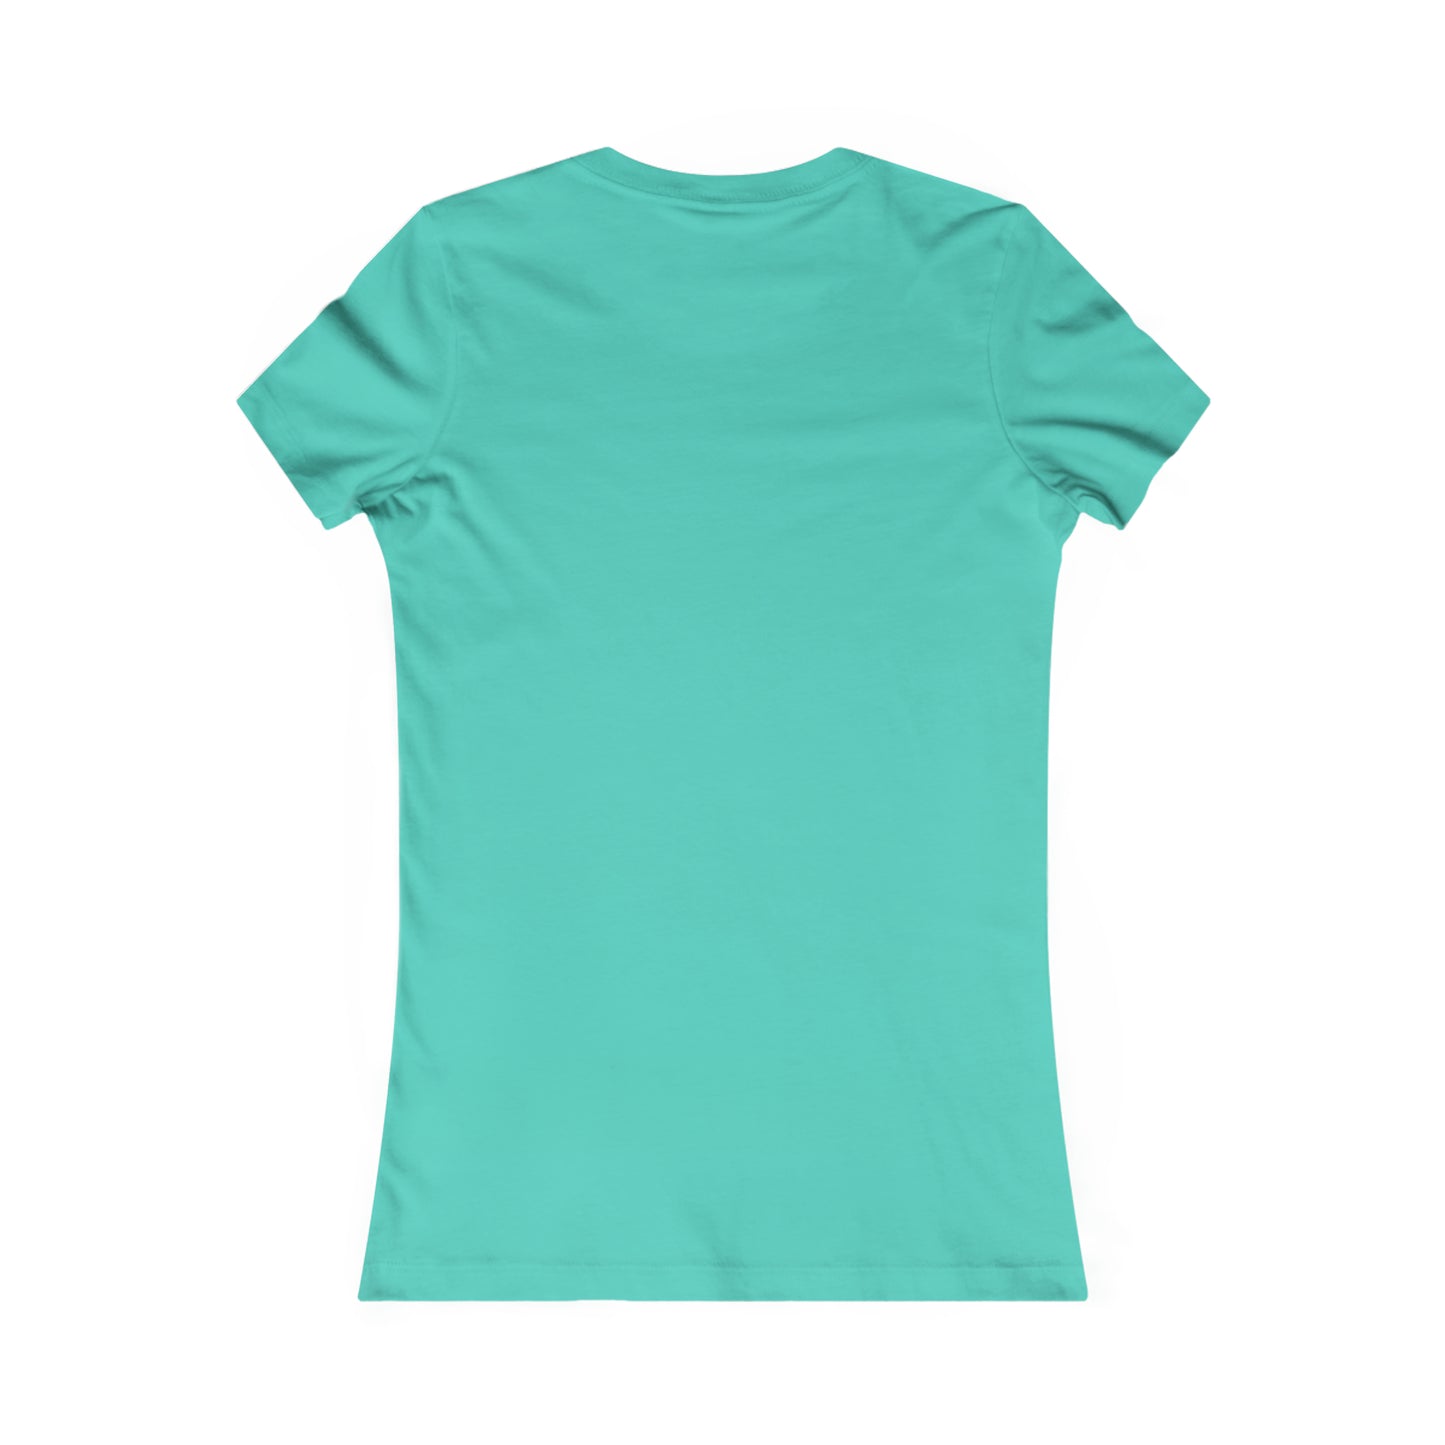 Women's Favorite Tee Vibrant Color Bugs 001 T-Shirt